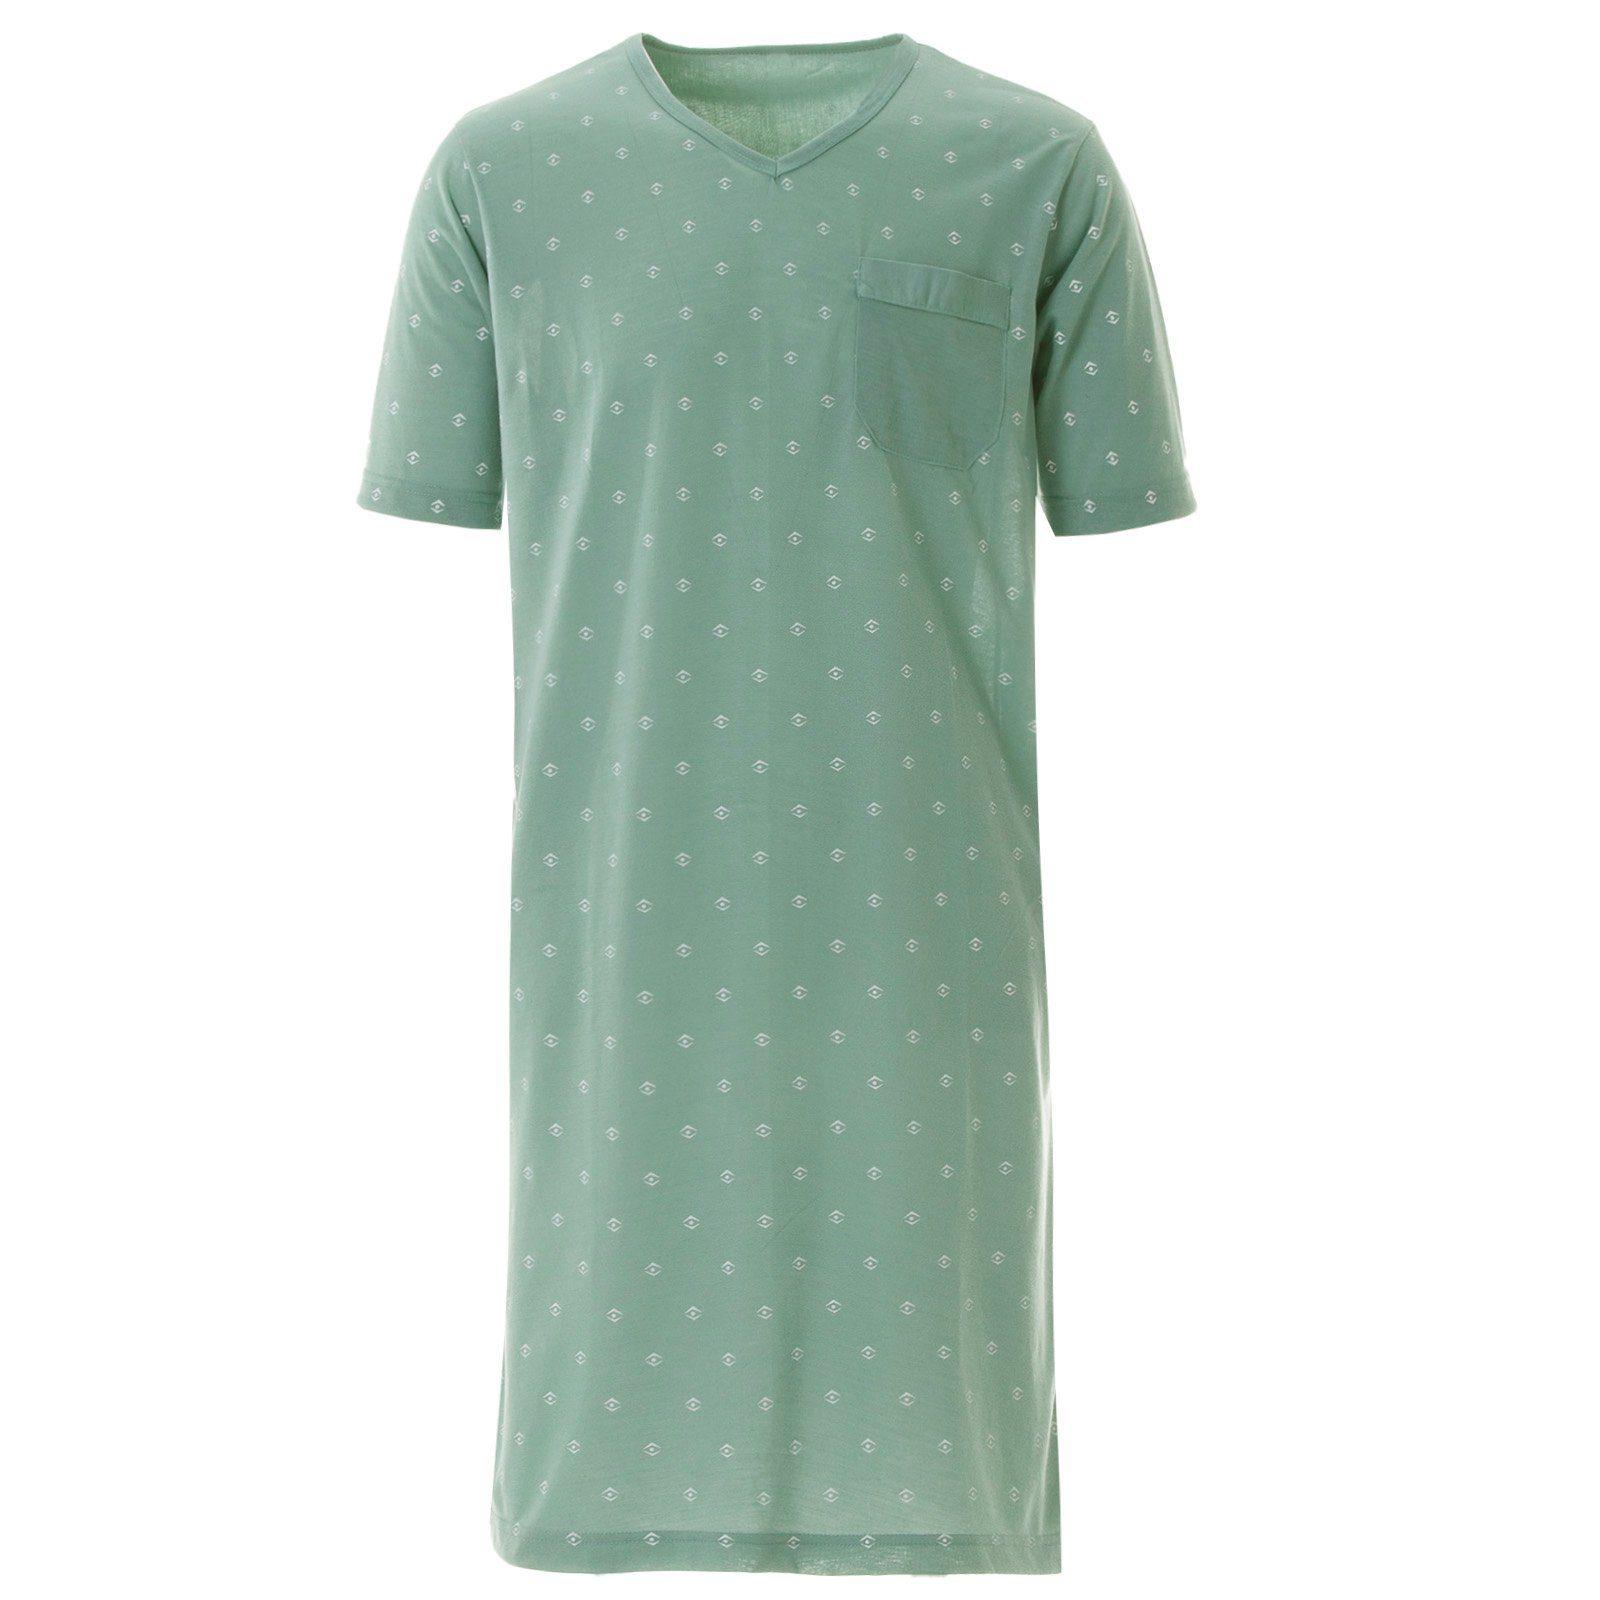 Lucky Nachthemd Nachthemd Kurzarm - Raute V-Ausschnitt Auge olive